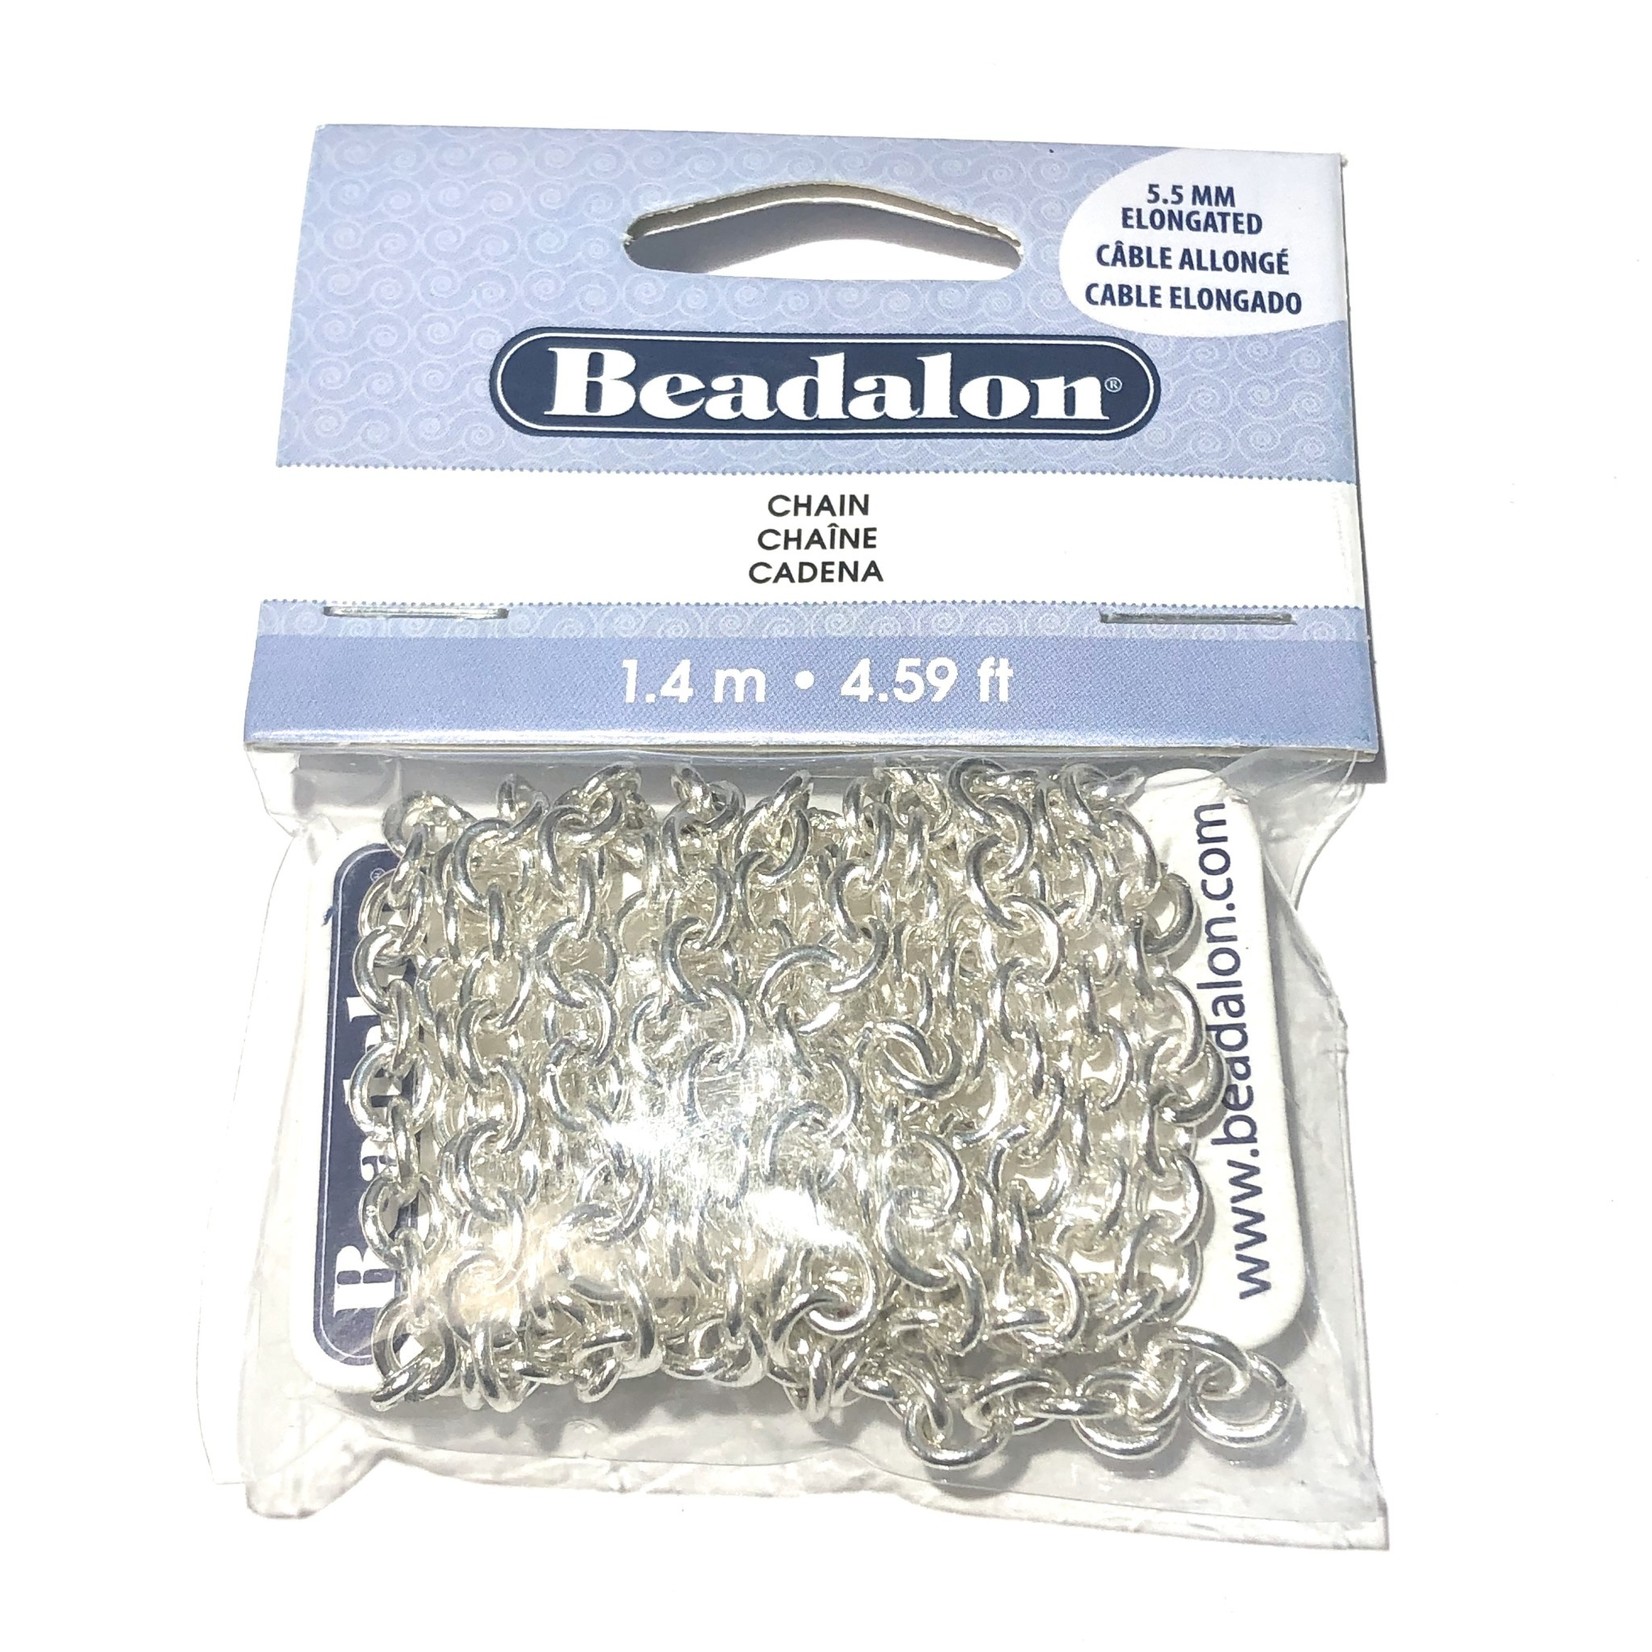 Beadalon Elongated Chain 5.5mm Silver Plated 1.4m